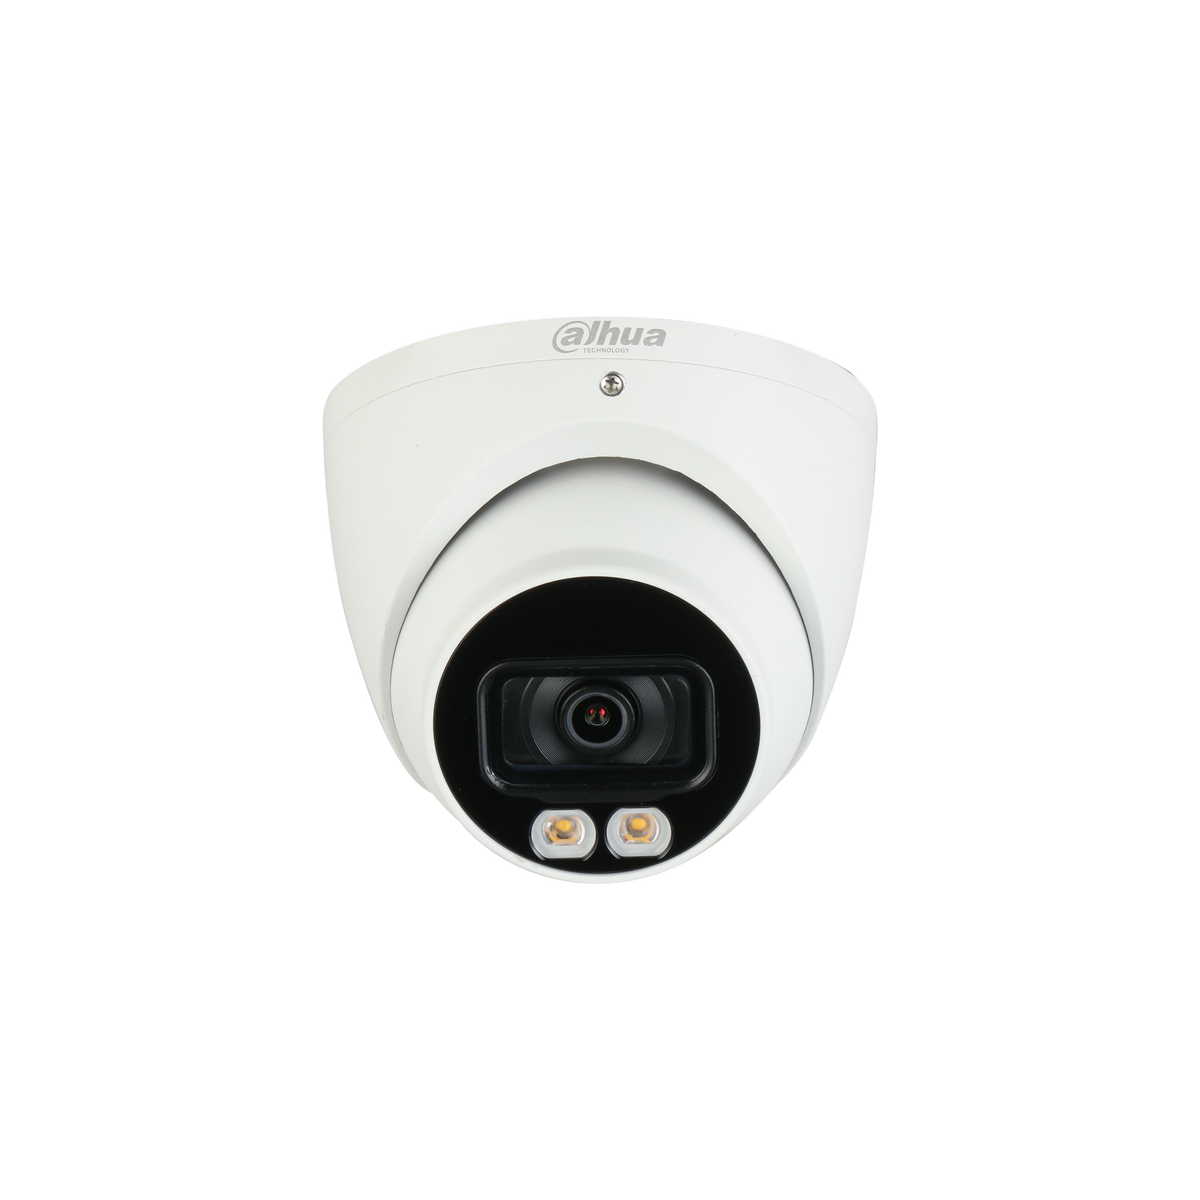 DAHUA IPC-HDW5442TM-AS-LED 4MP WDR Eyeball AI Network Camera